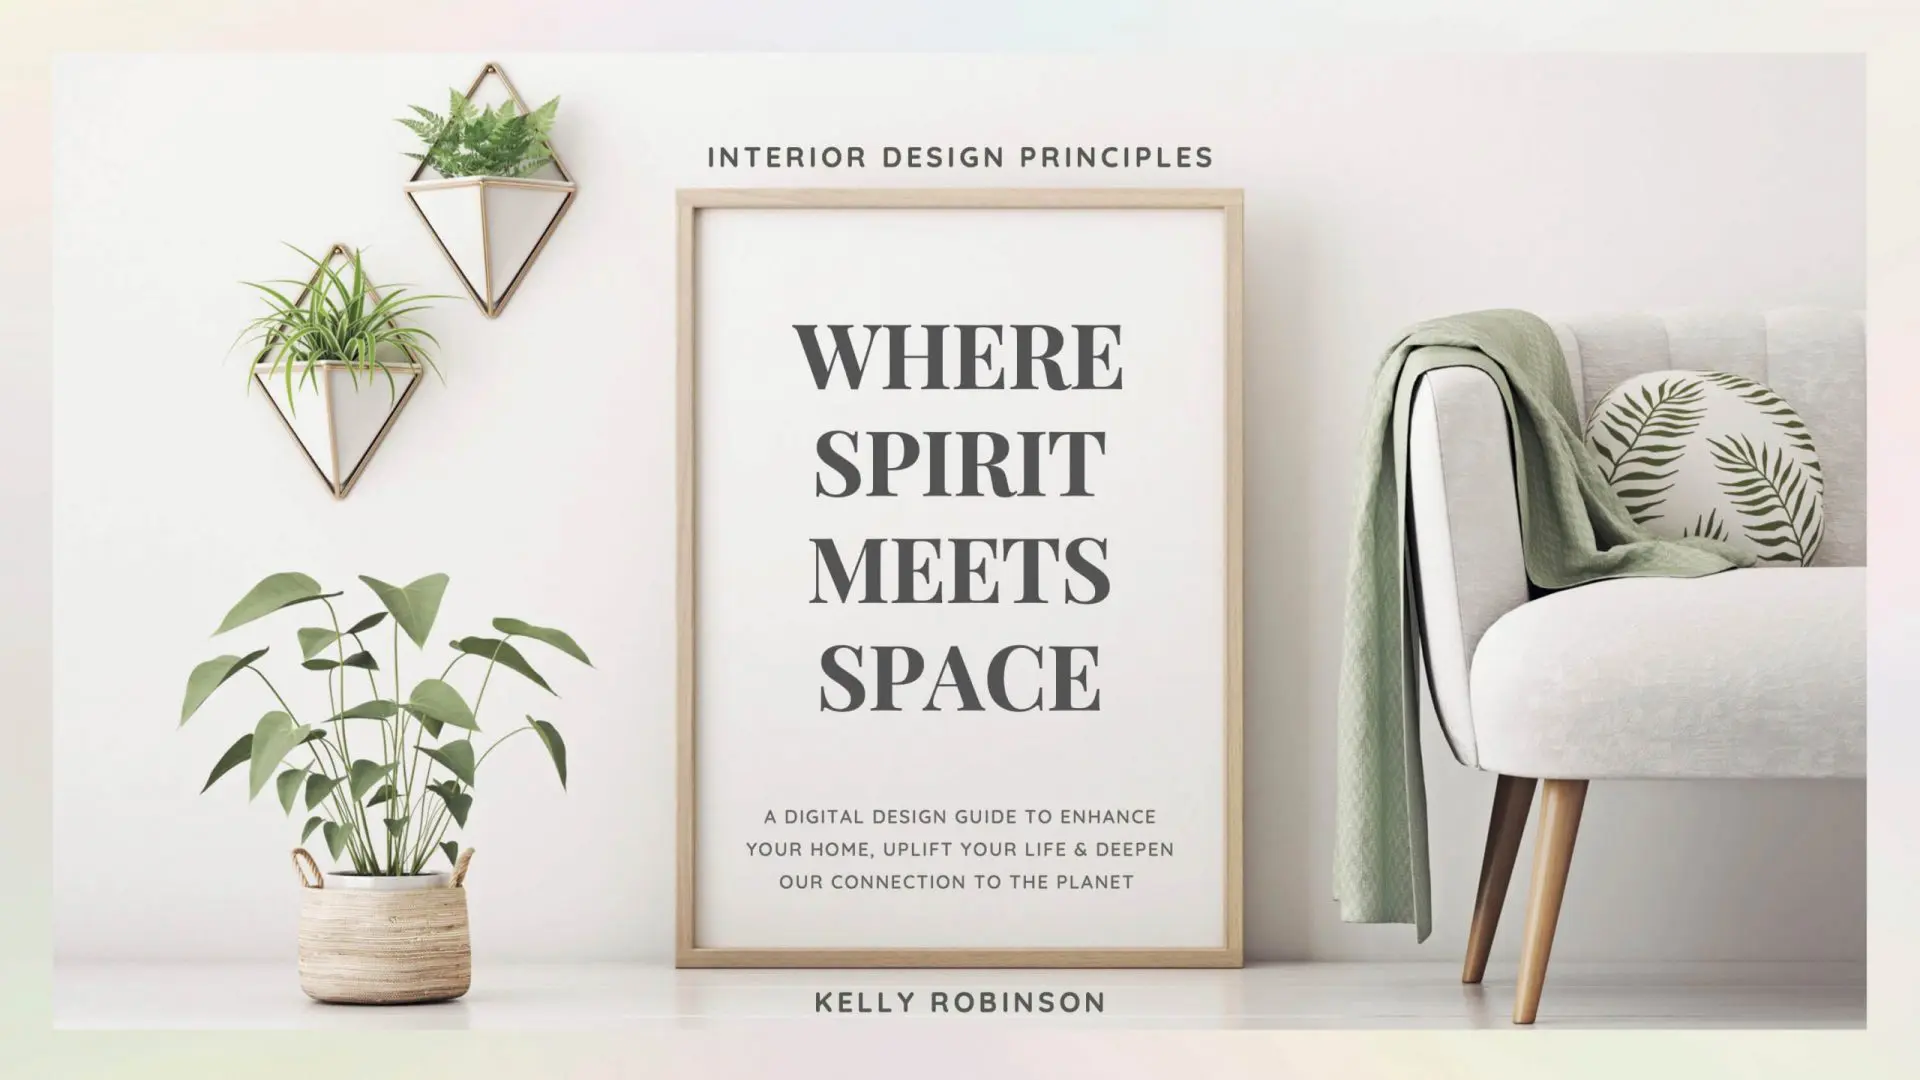 Kelly Robinson - where spirit meets space